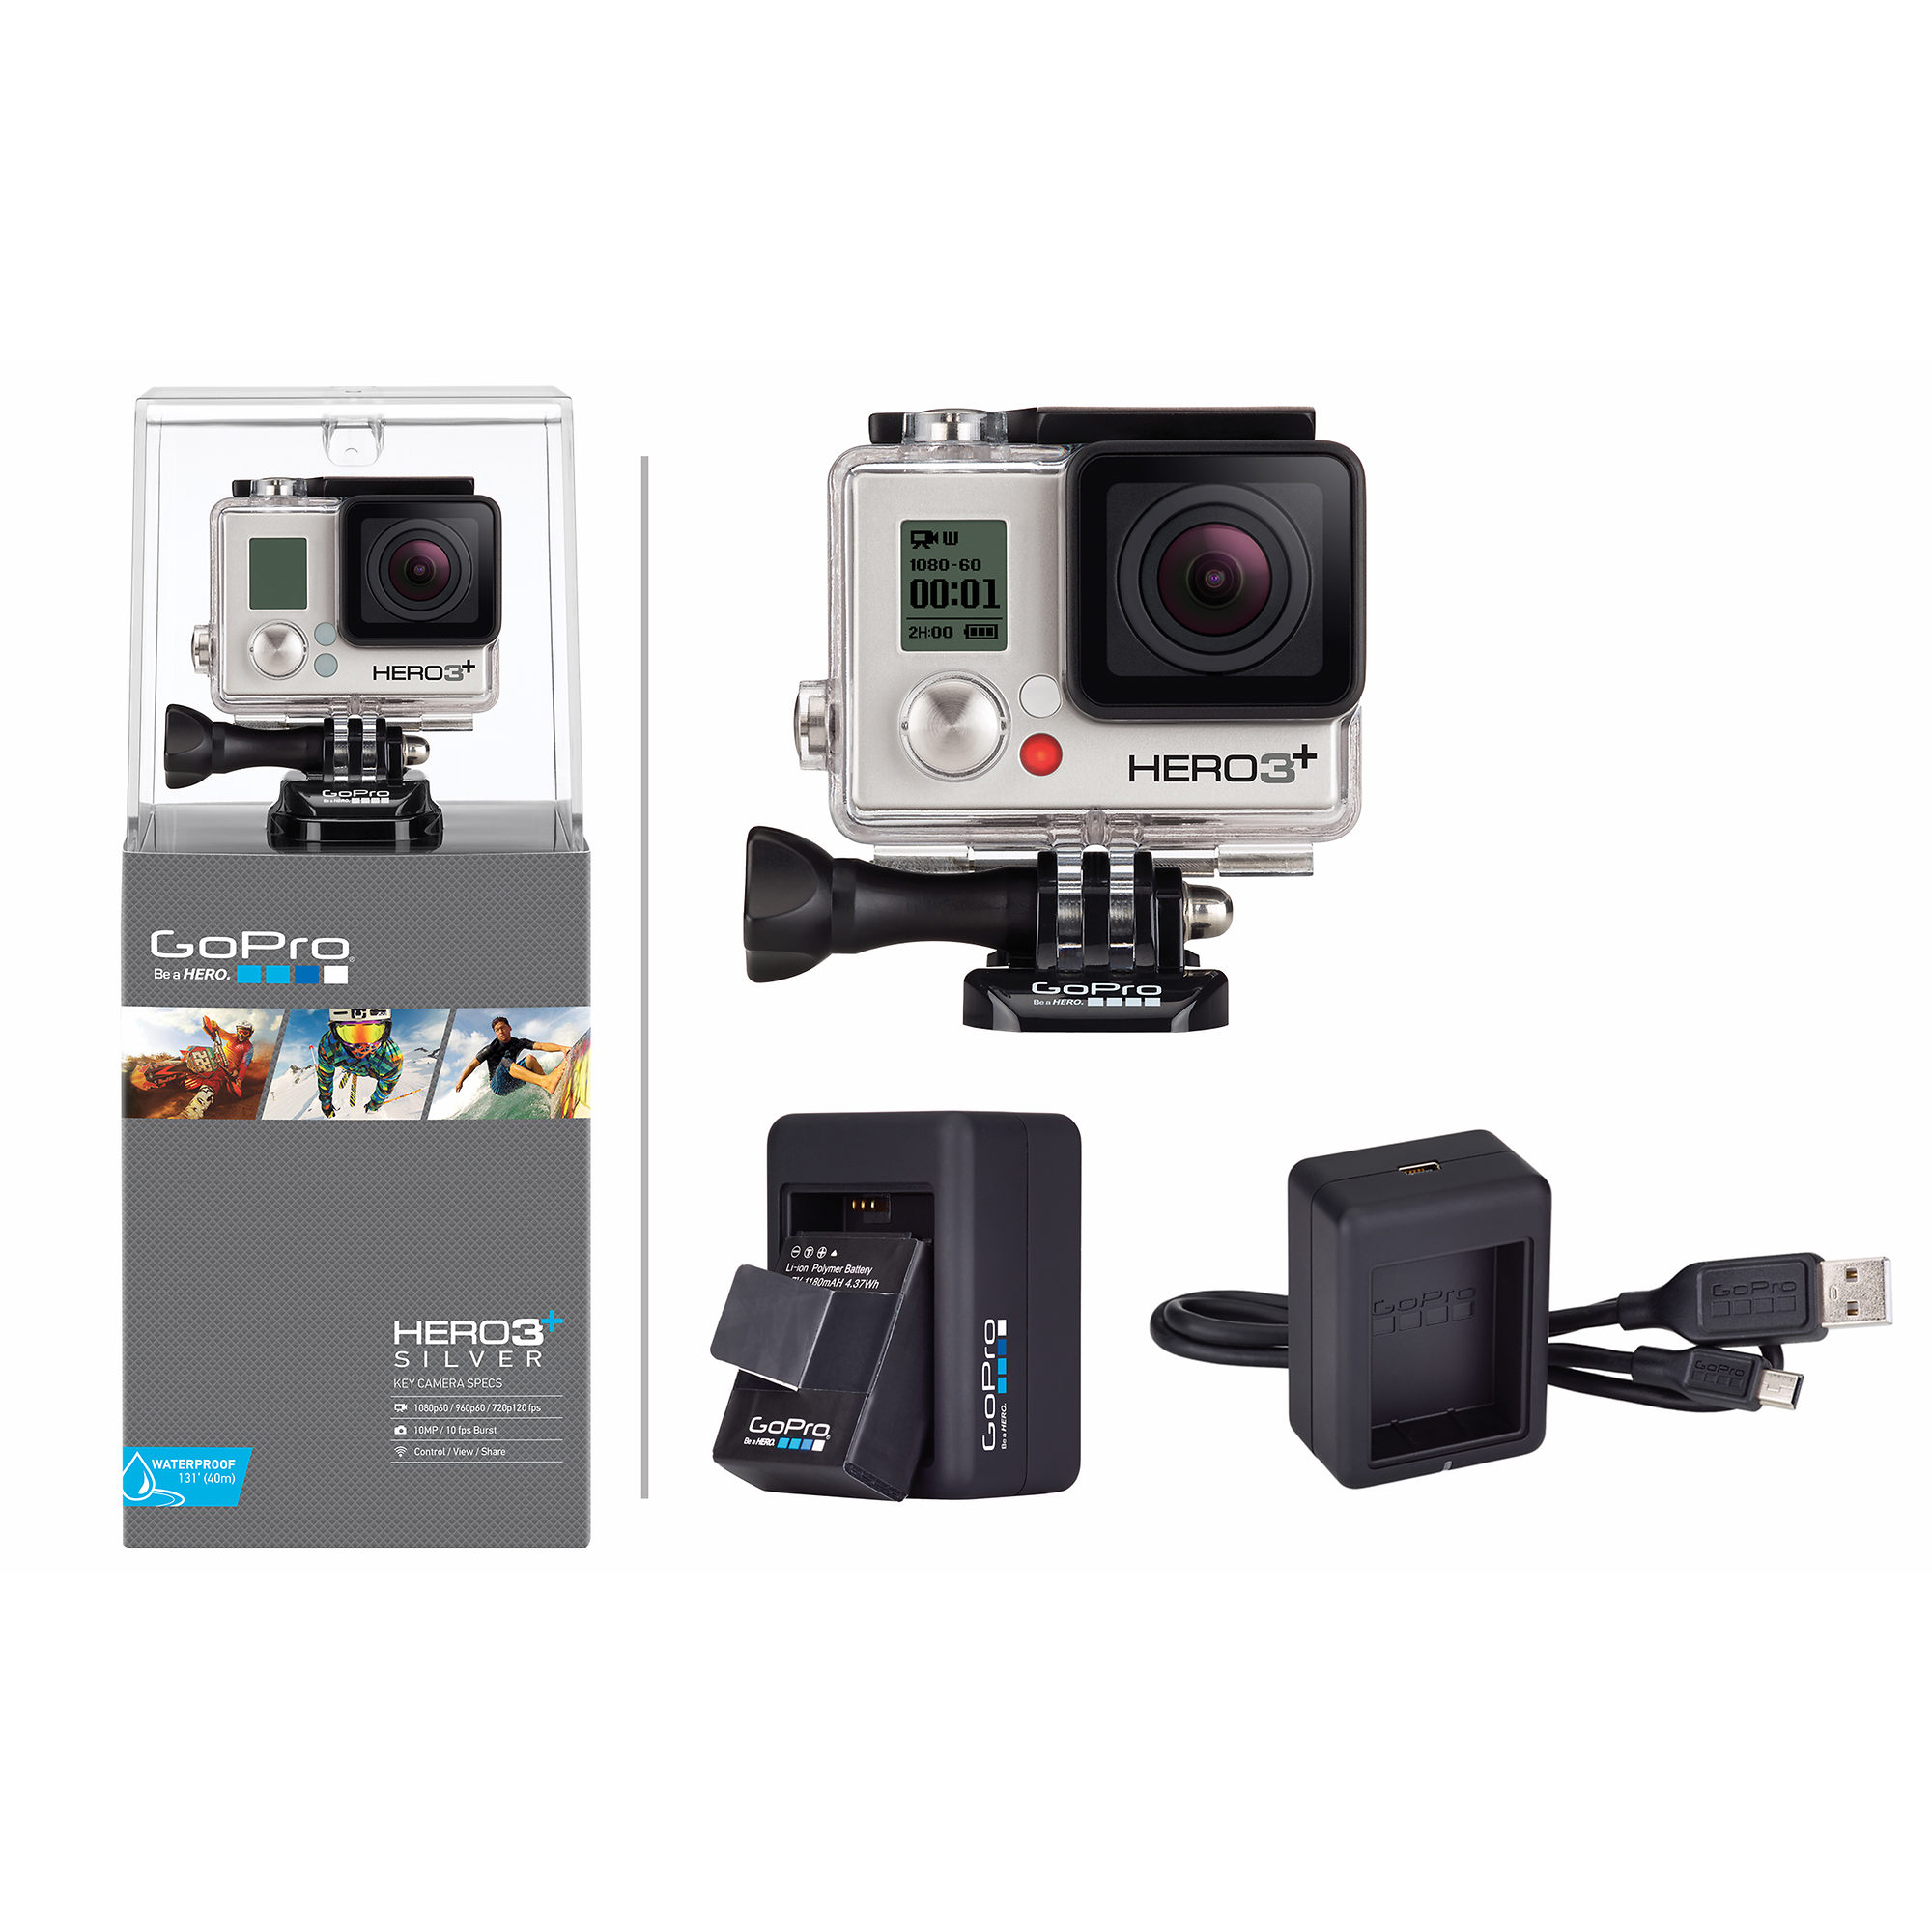 GoPro Hero3+ 銀色版運動攝像機 + 額外電池充電器套裝 $242.95